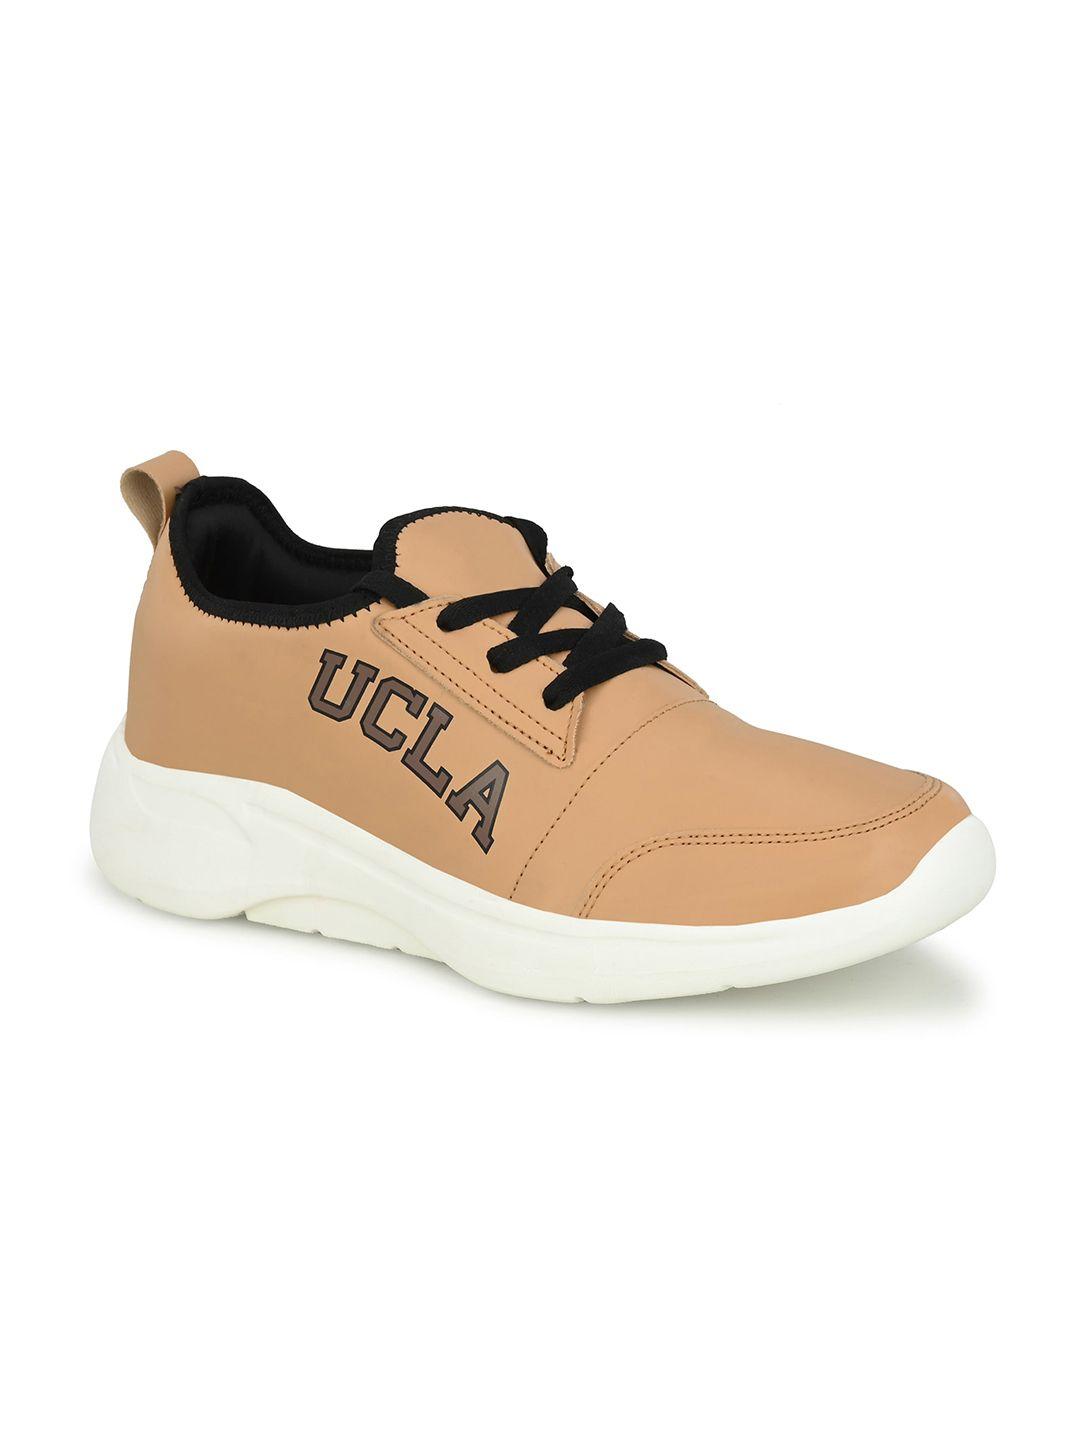 ucla-men-running-non-marking-shoes